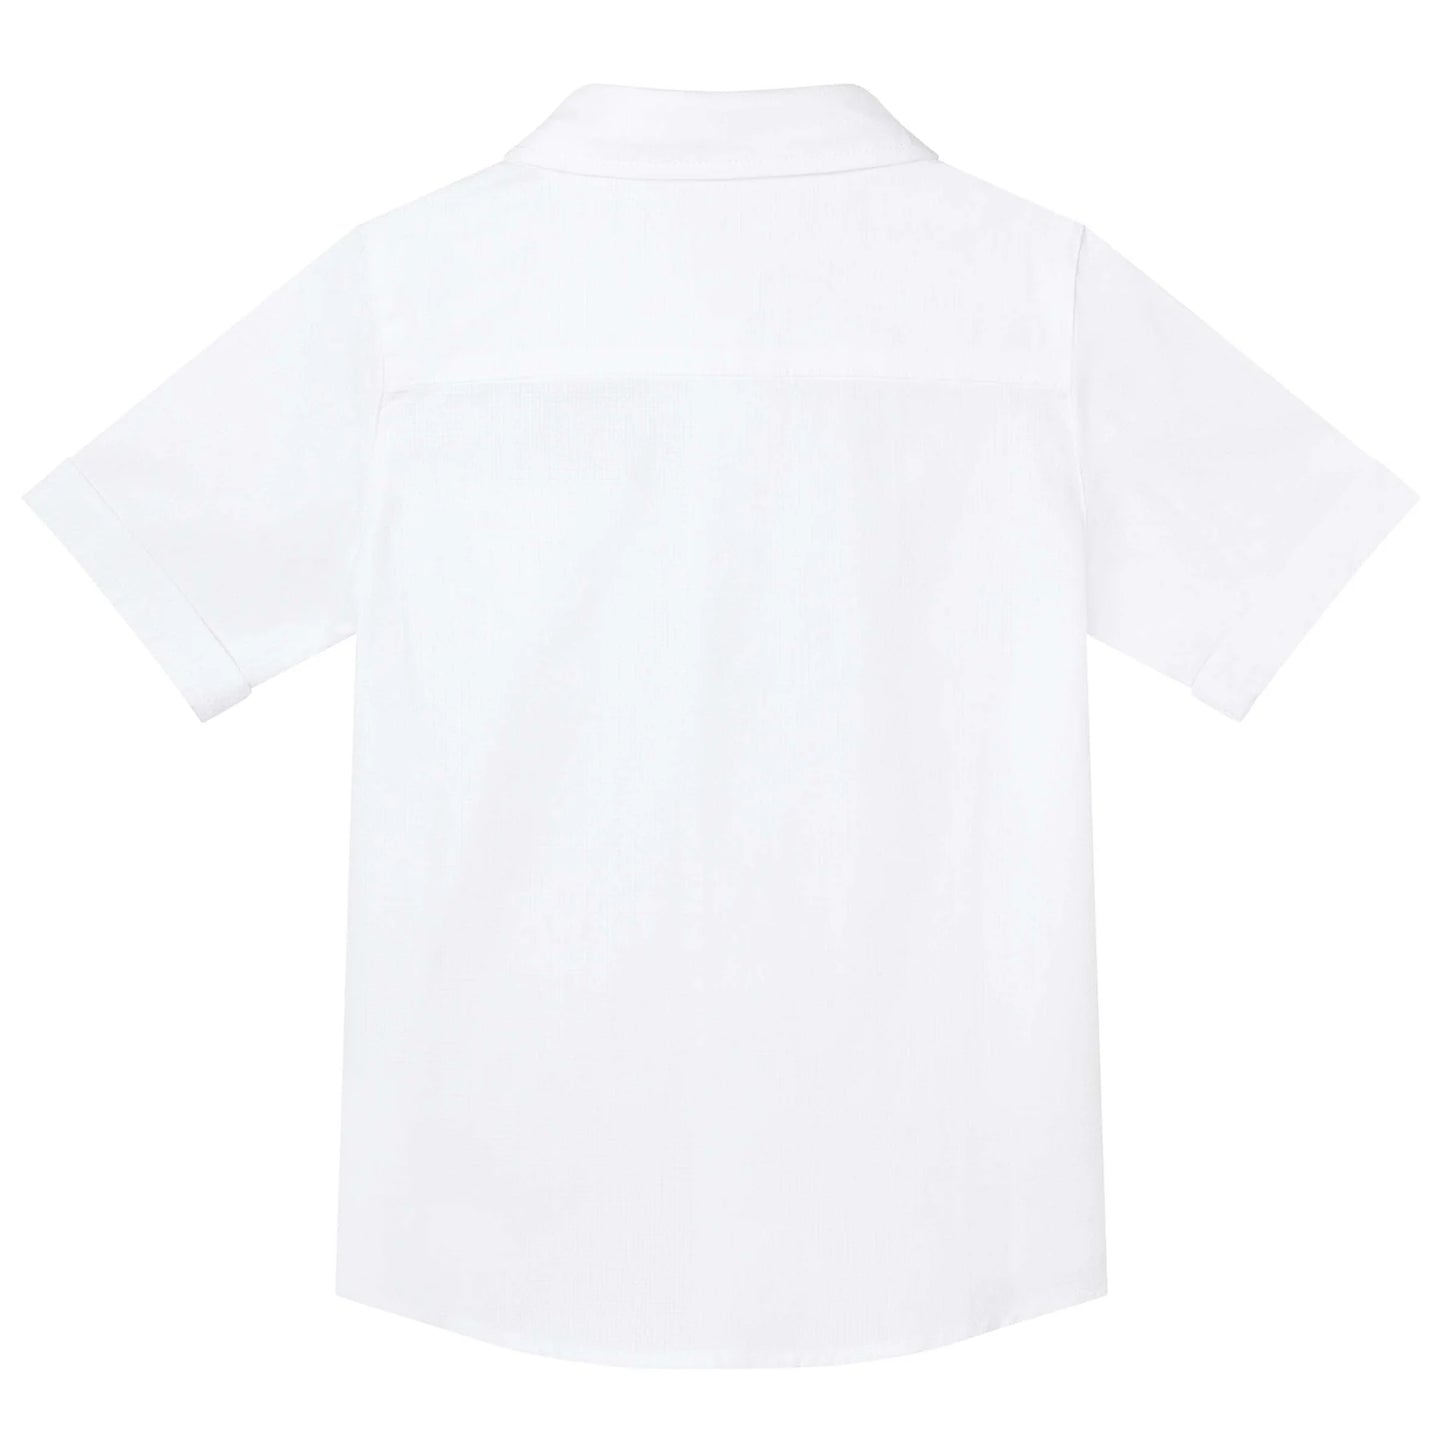 Jackson S/S Formal  White Shirt